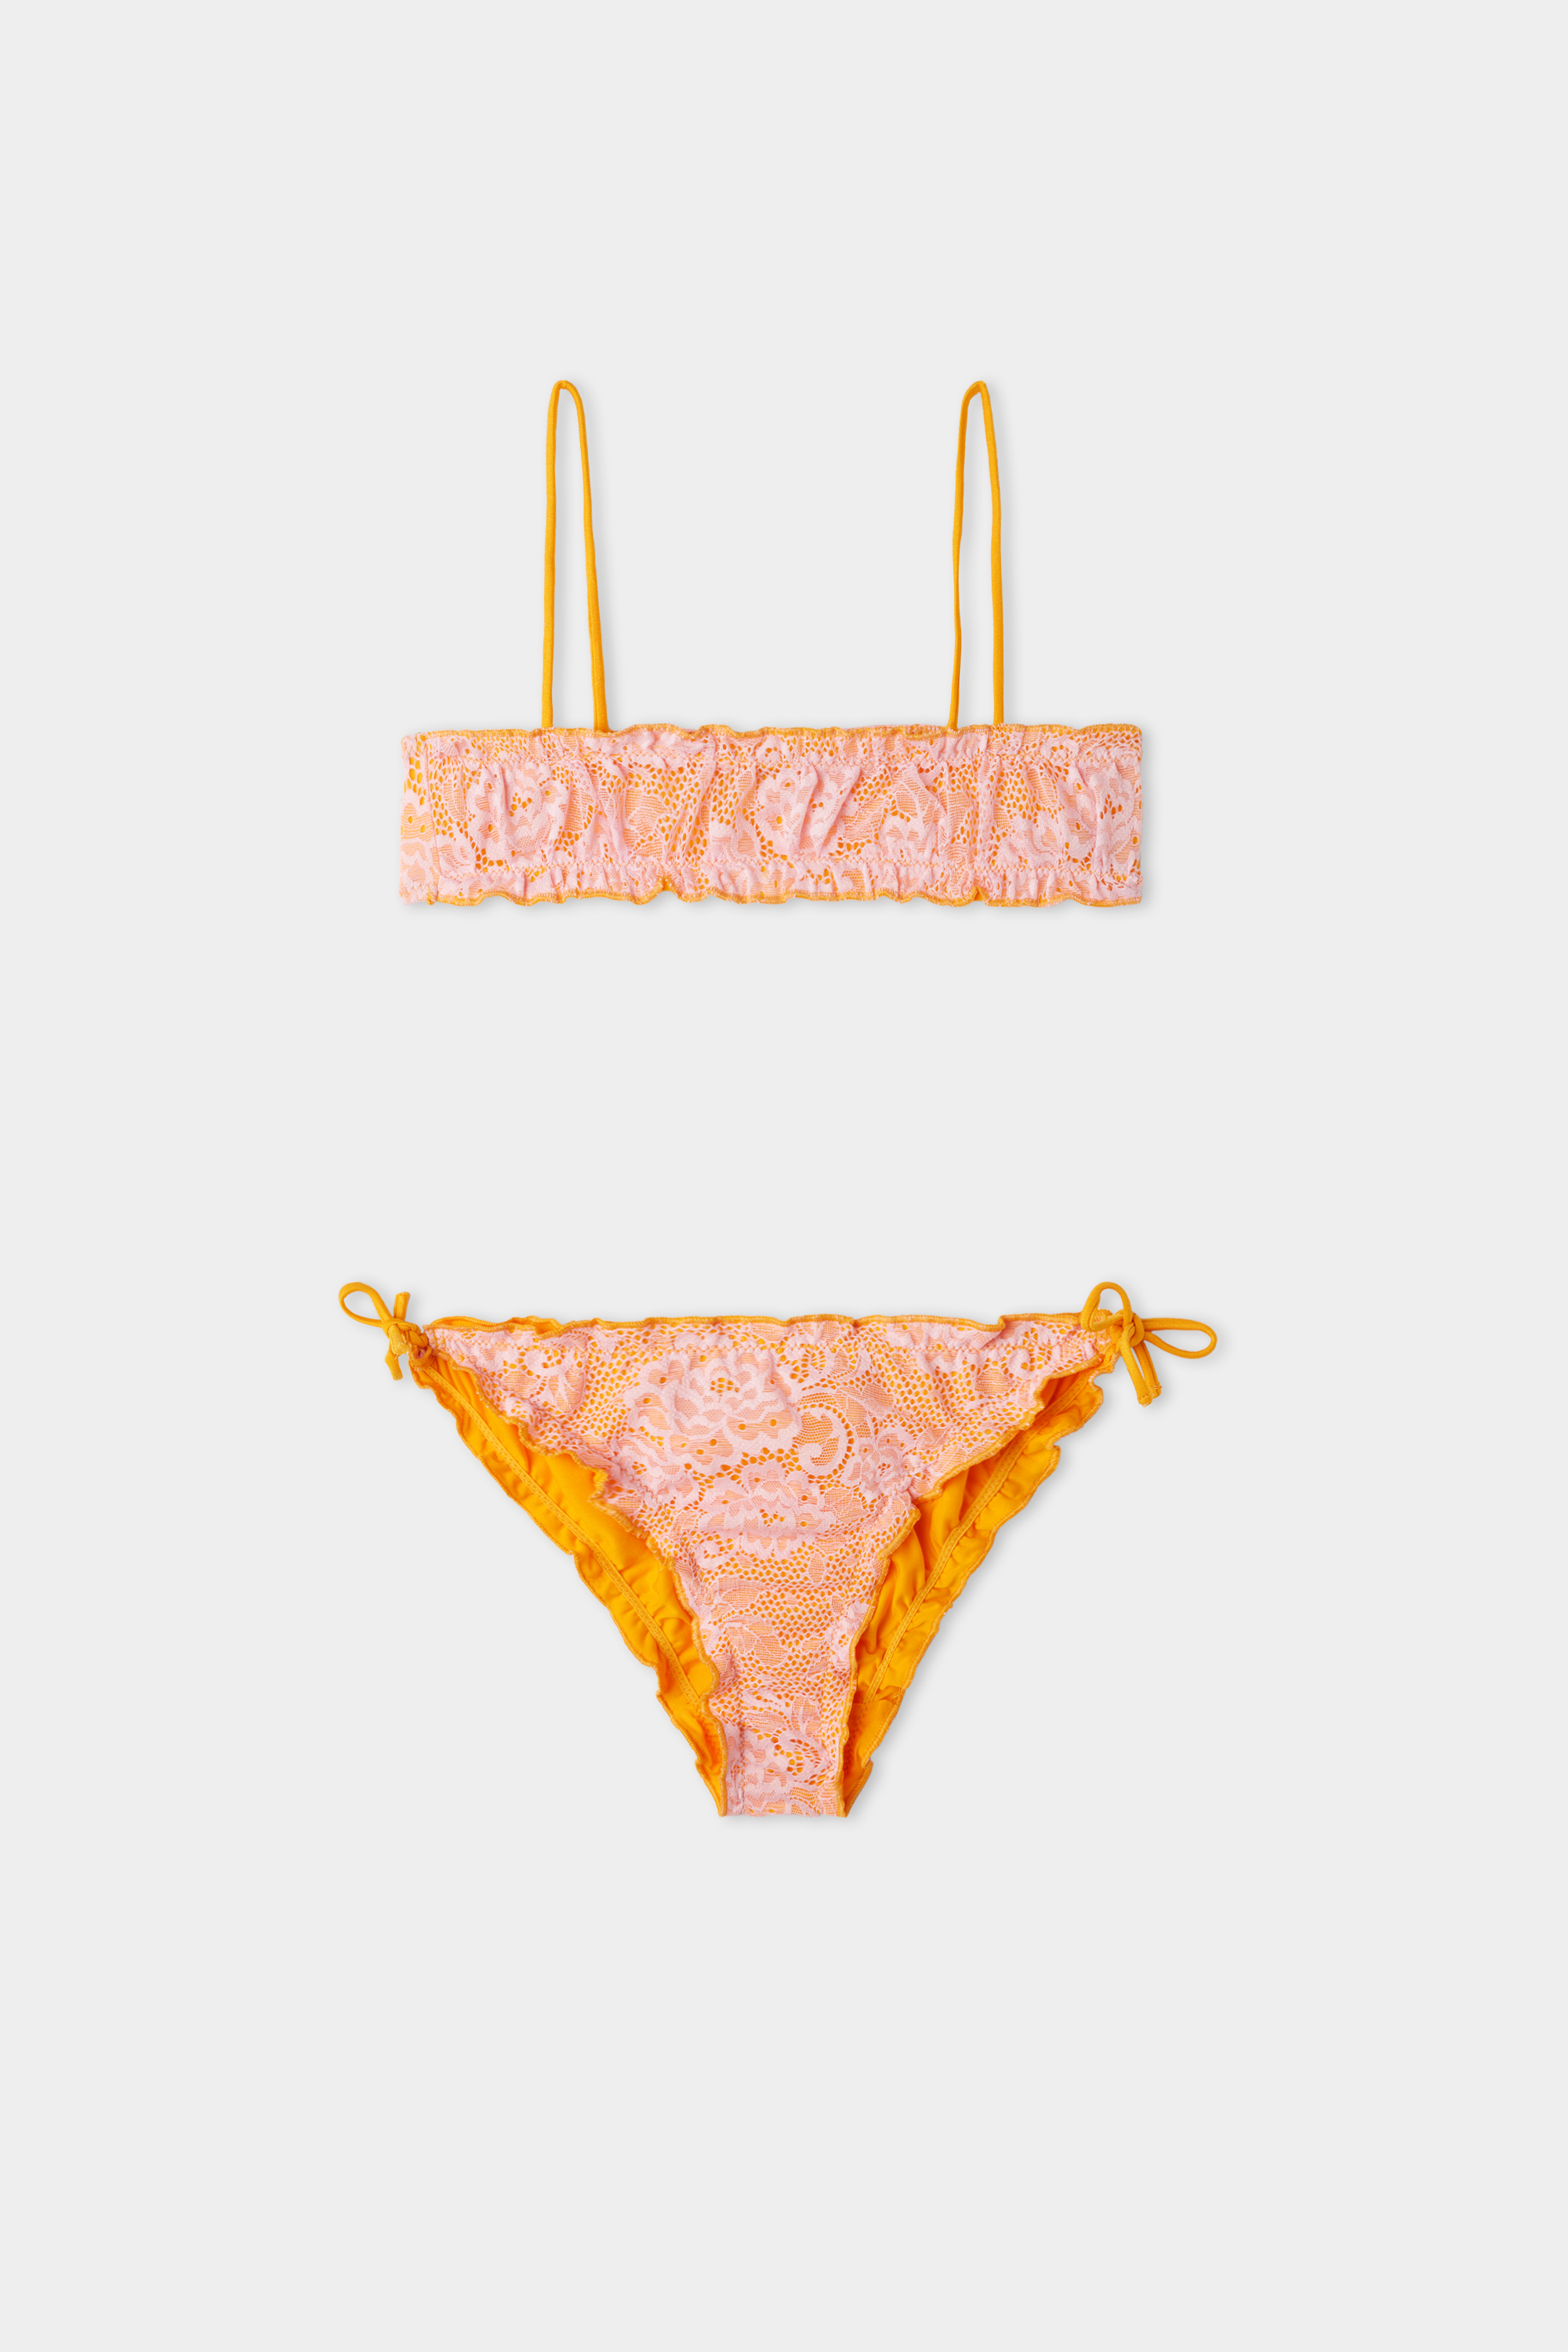 Girls’ Blush Lace Bikini Bralette and Bottoms with Ties